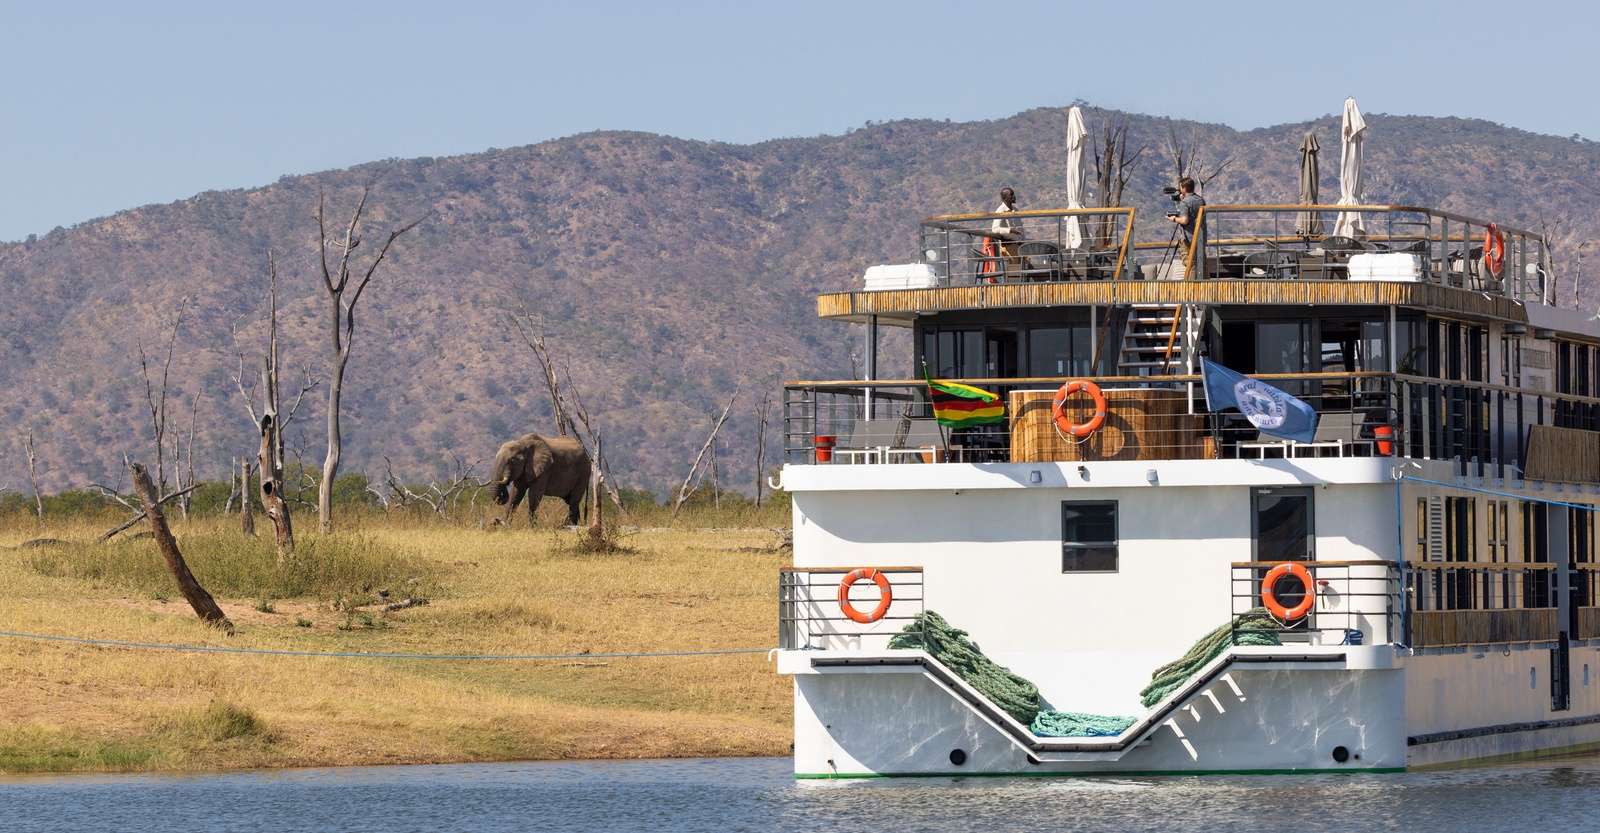 Nat Hab guest aboard the Zimbabwean Dream and elephant, Lake Kariba, Zimbabwe.